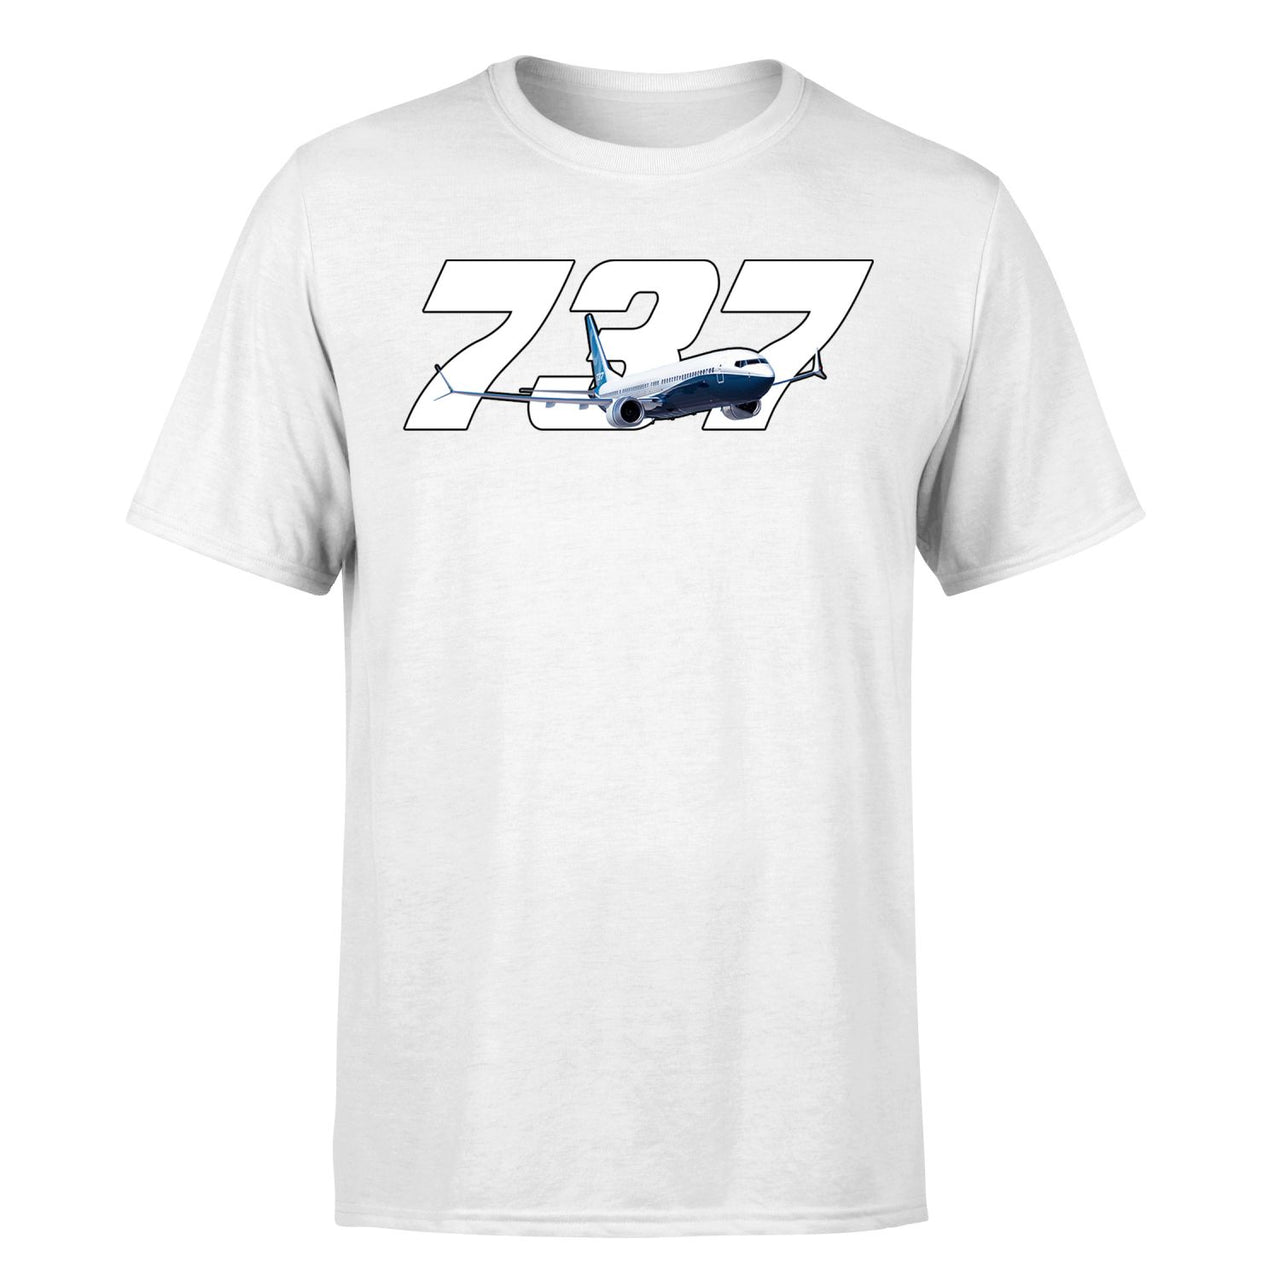 Super Boeing 737 Designed T-Shirts